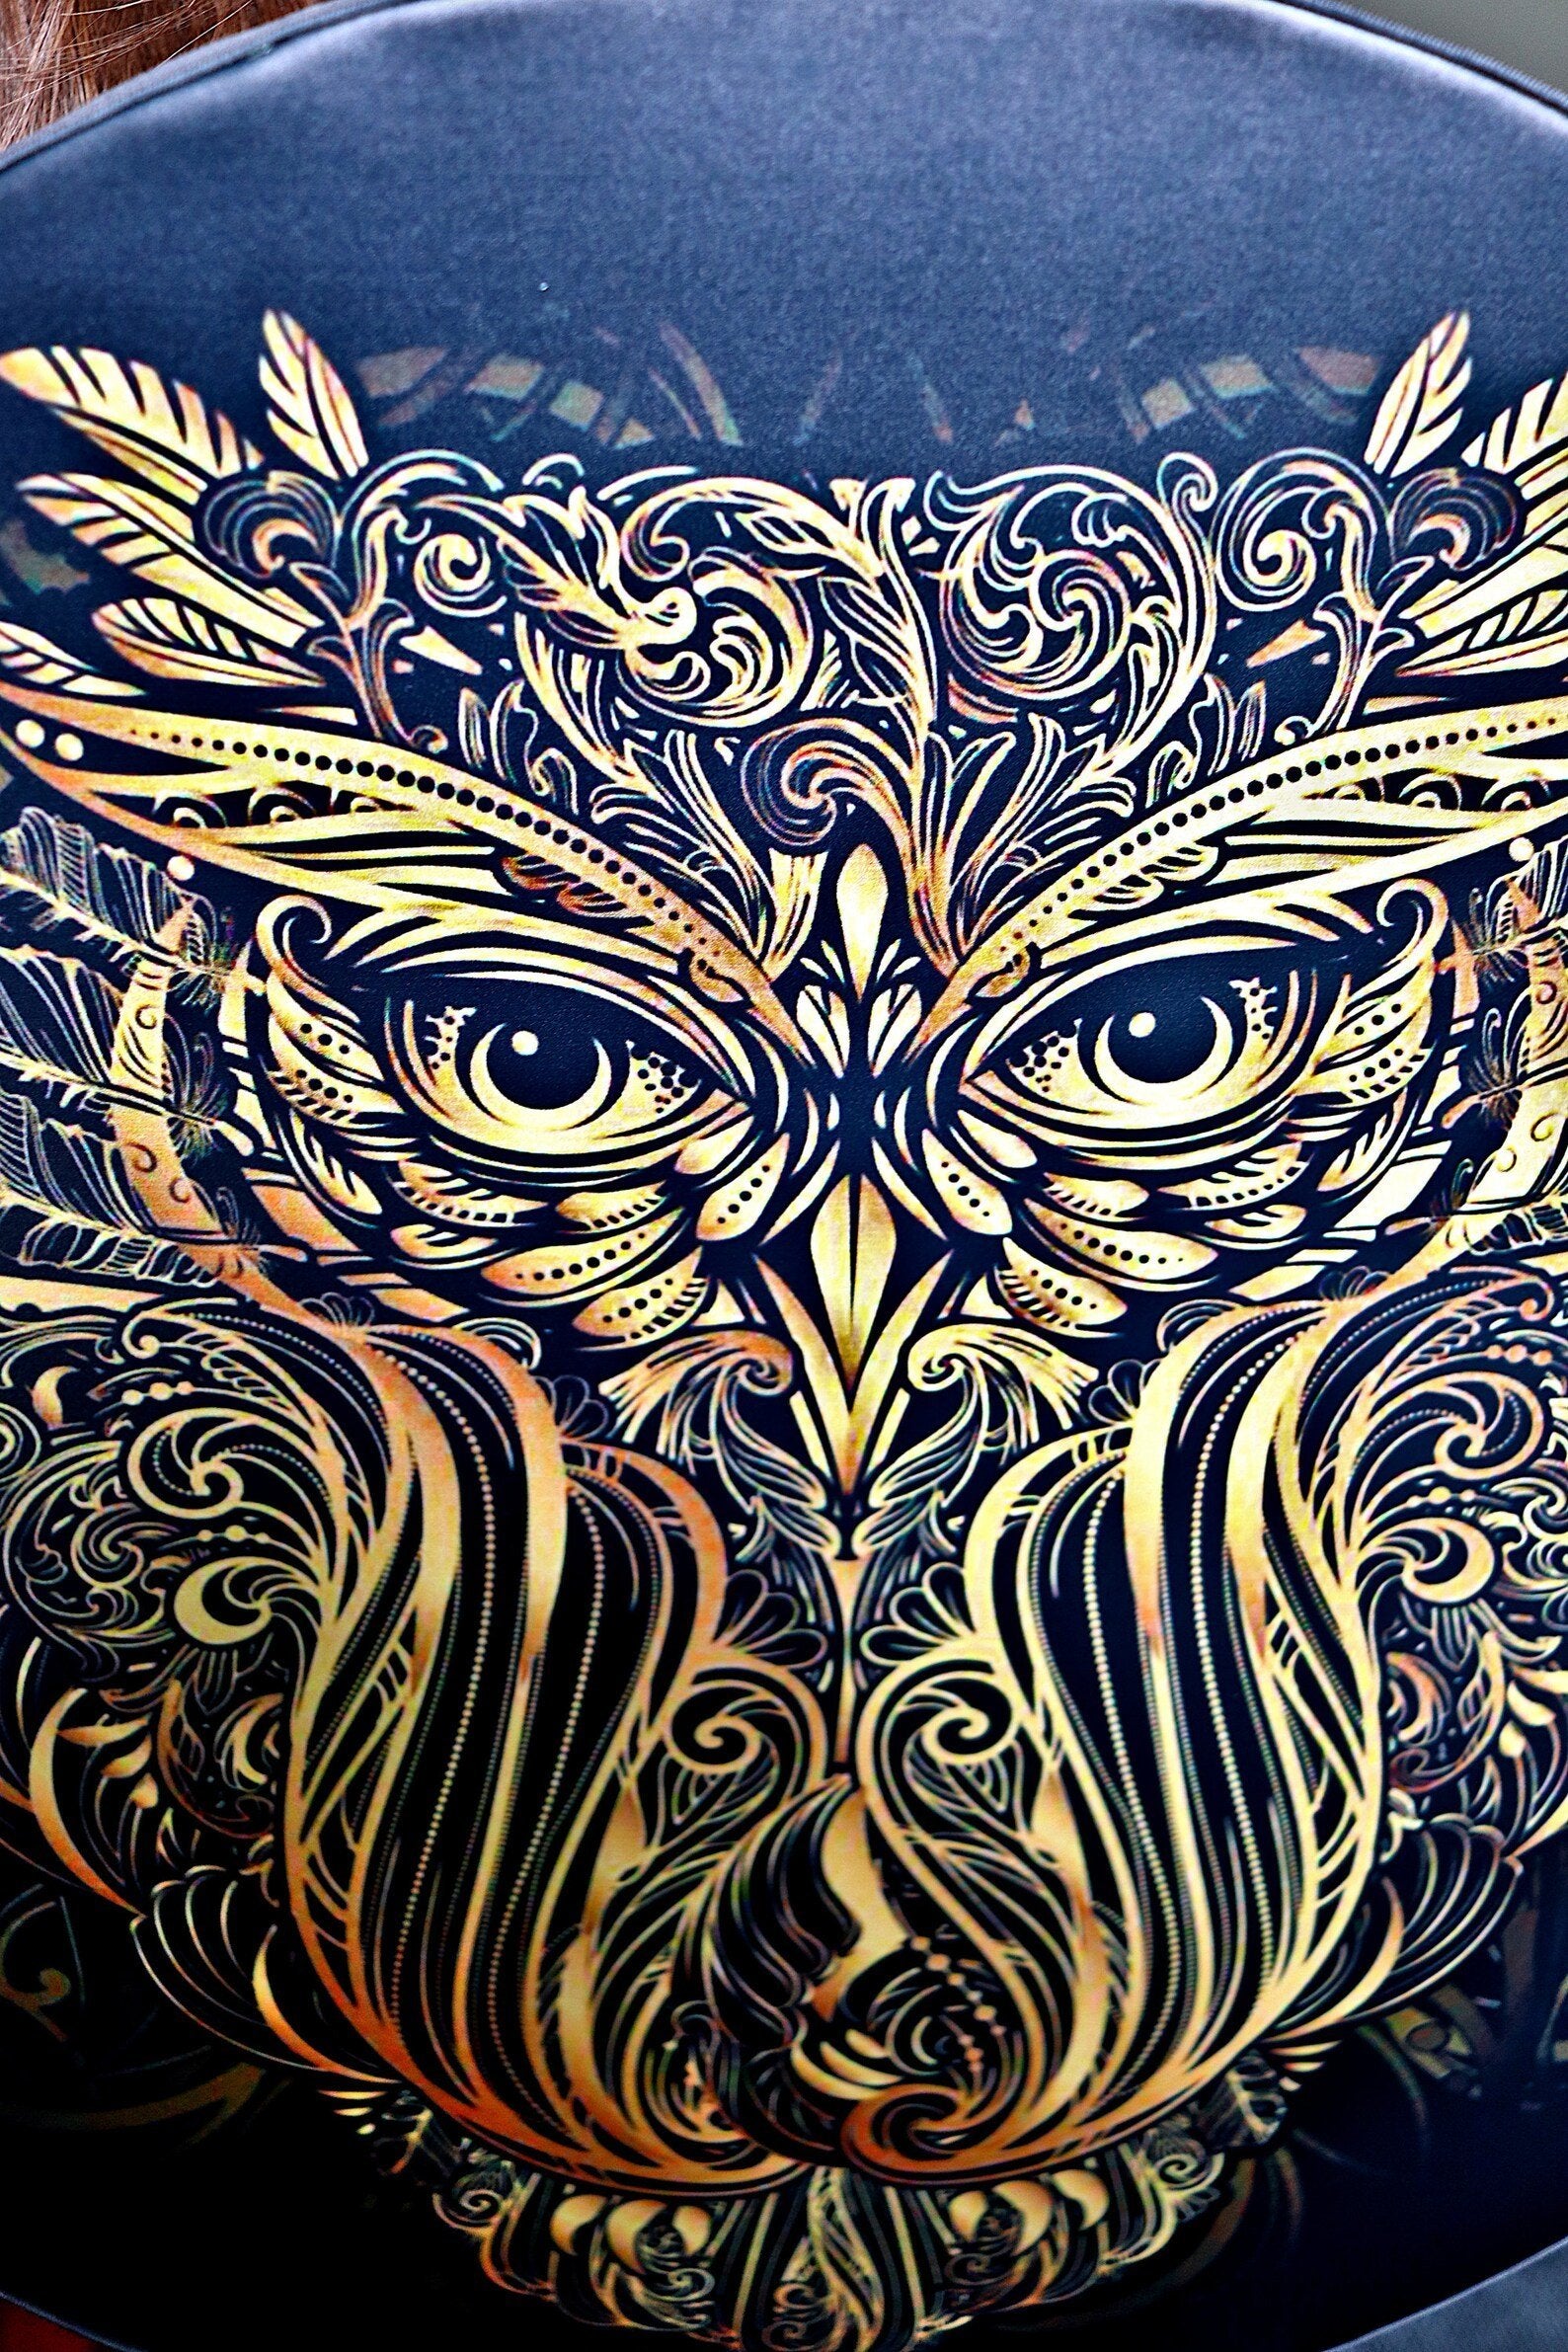 VEGAN SHAMAN DRUM "OWL SOUL", HEALING SOUND THERAPY mysite